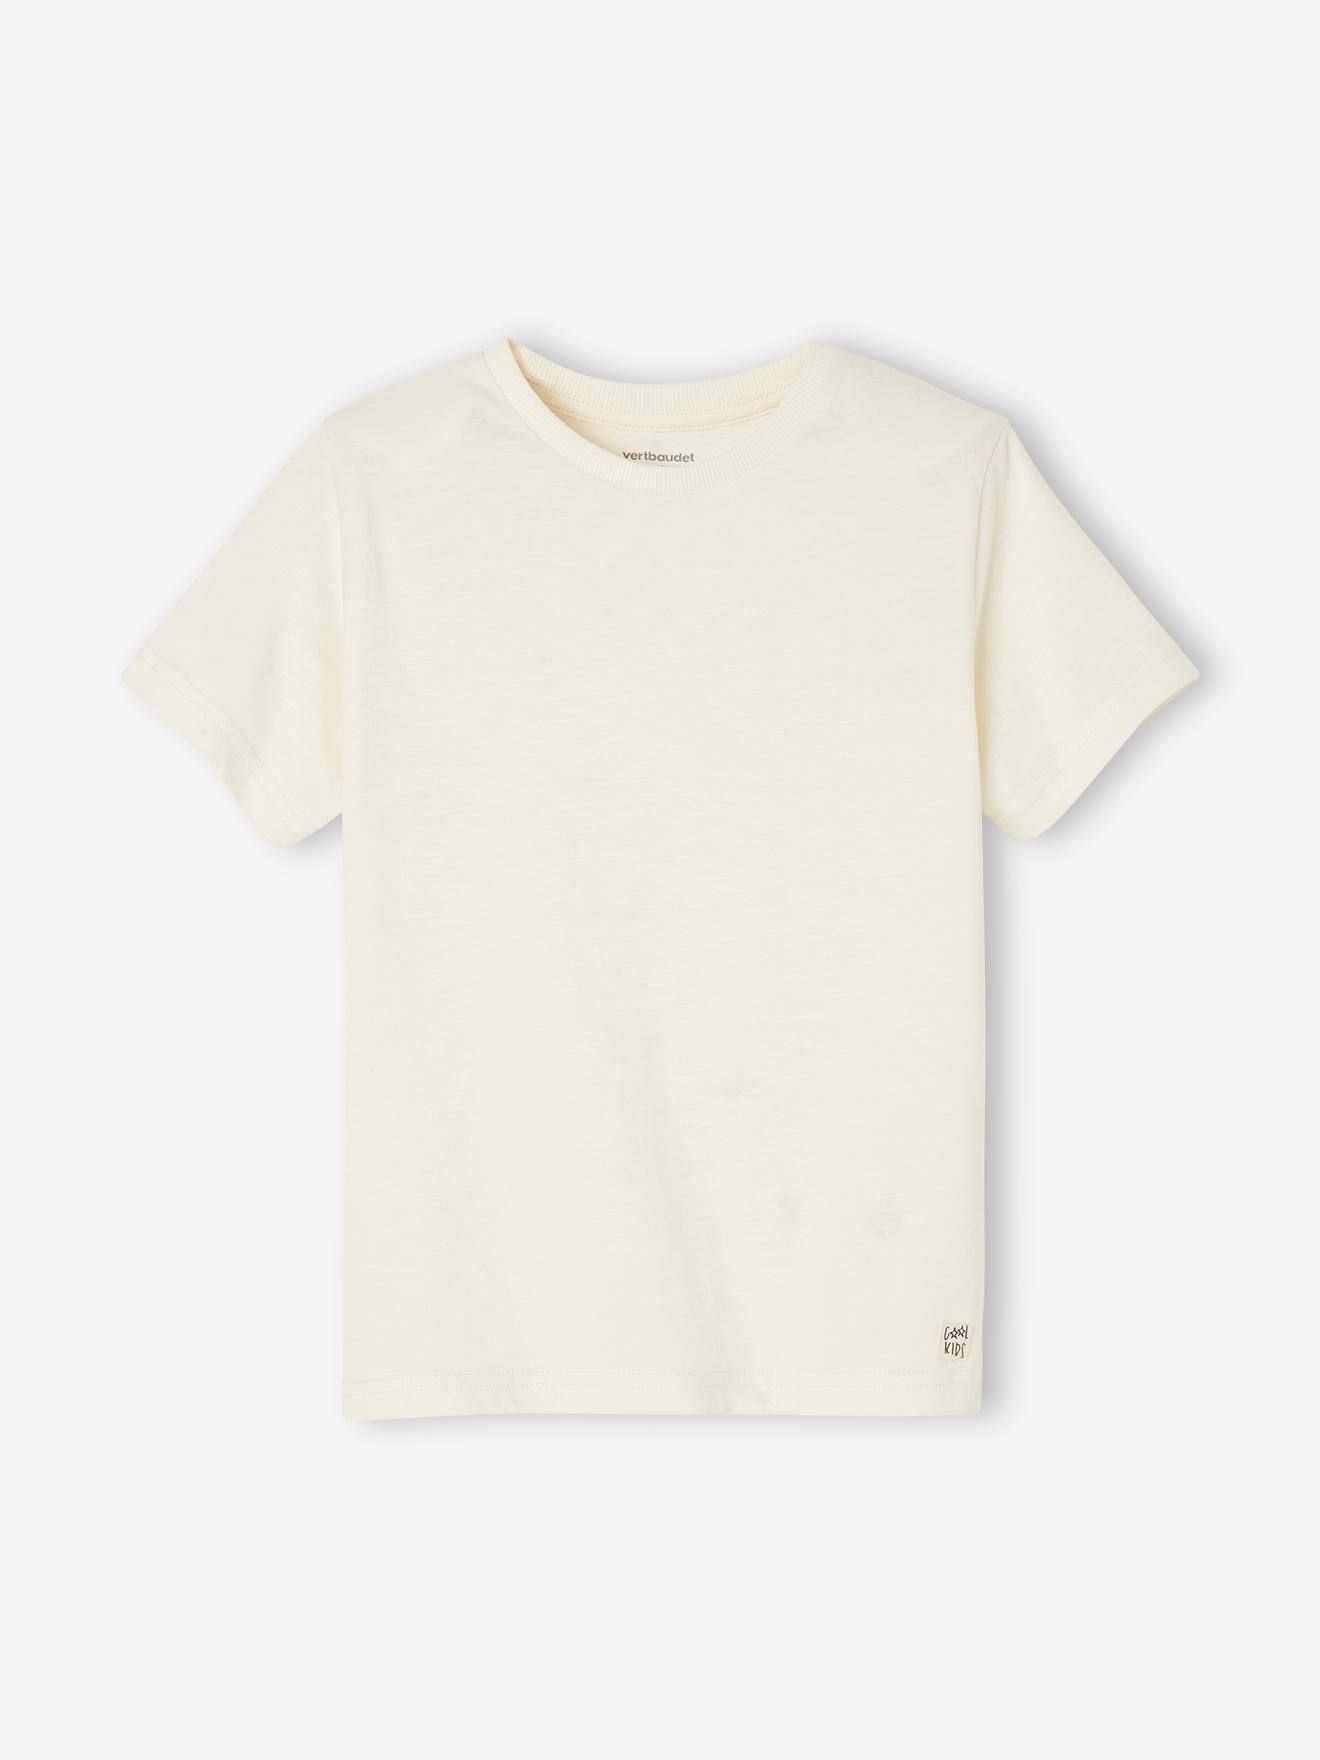 T-shirt Basics personnalisable garçon manches courtes blanc - Vertbaudet | Vertbaudet (FR)